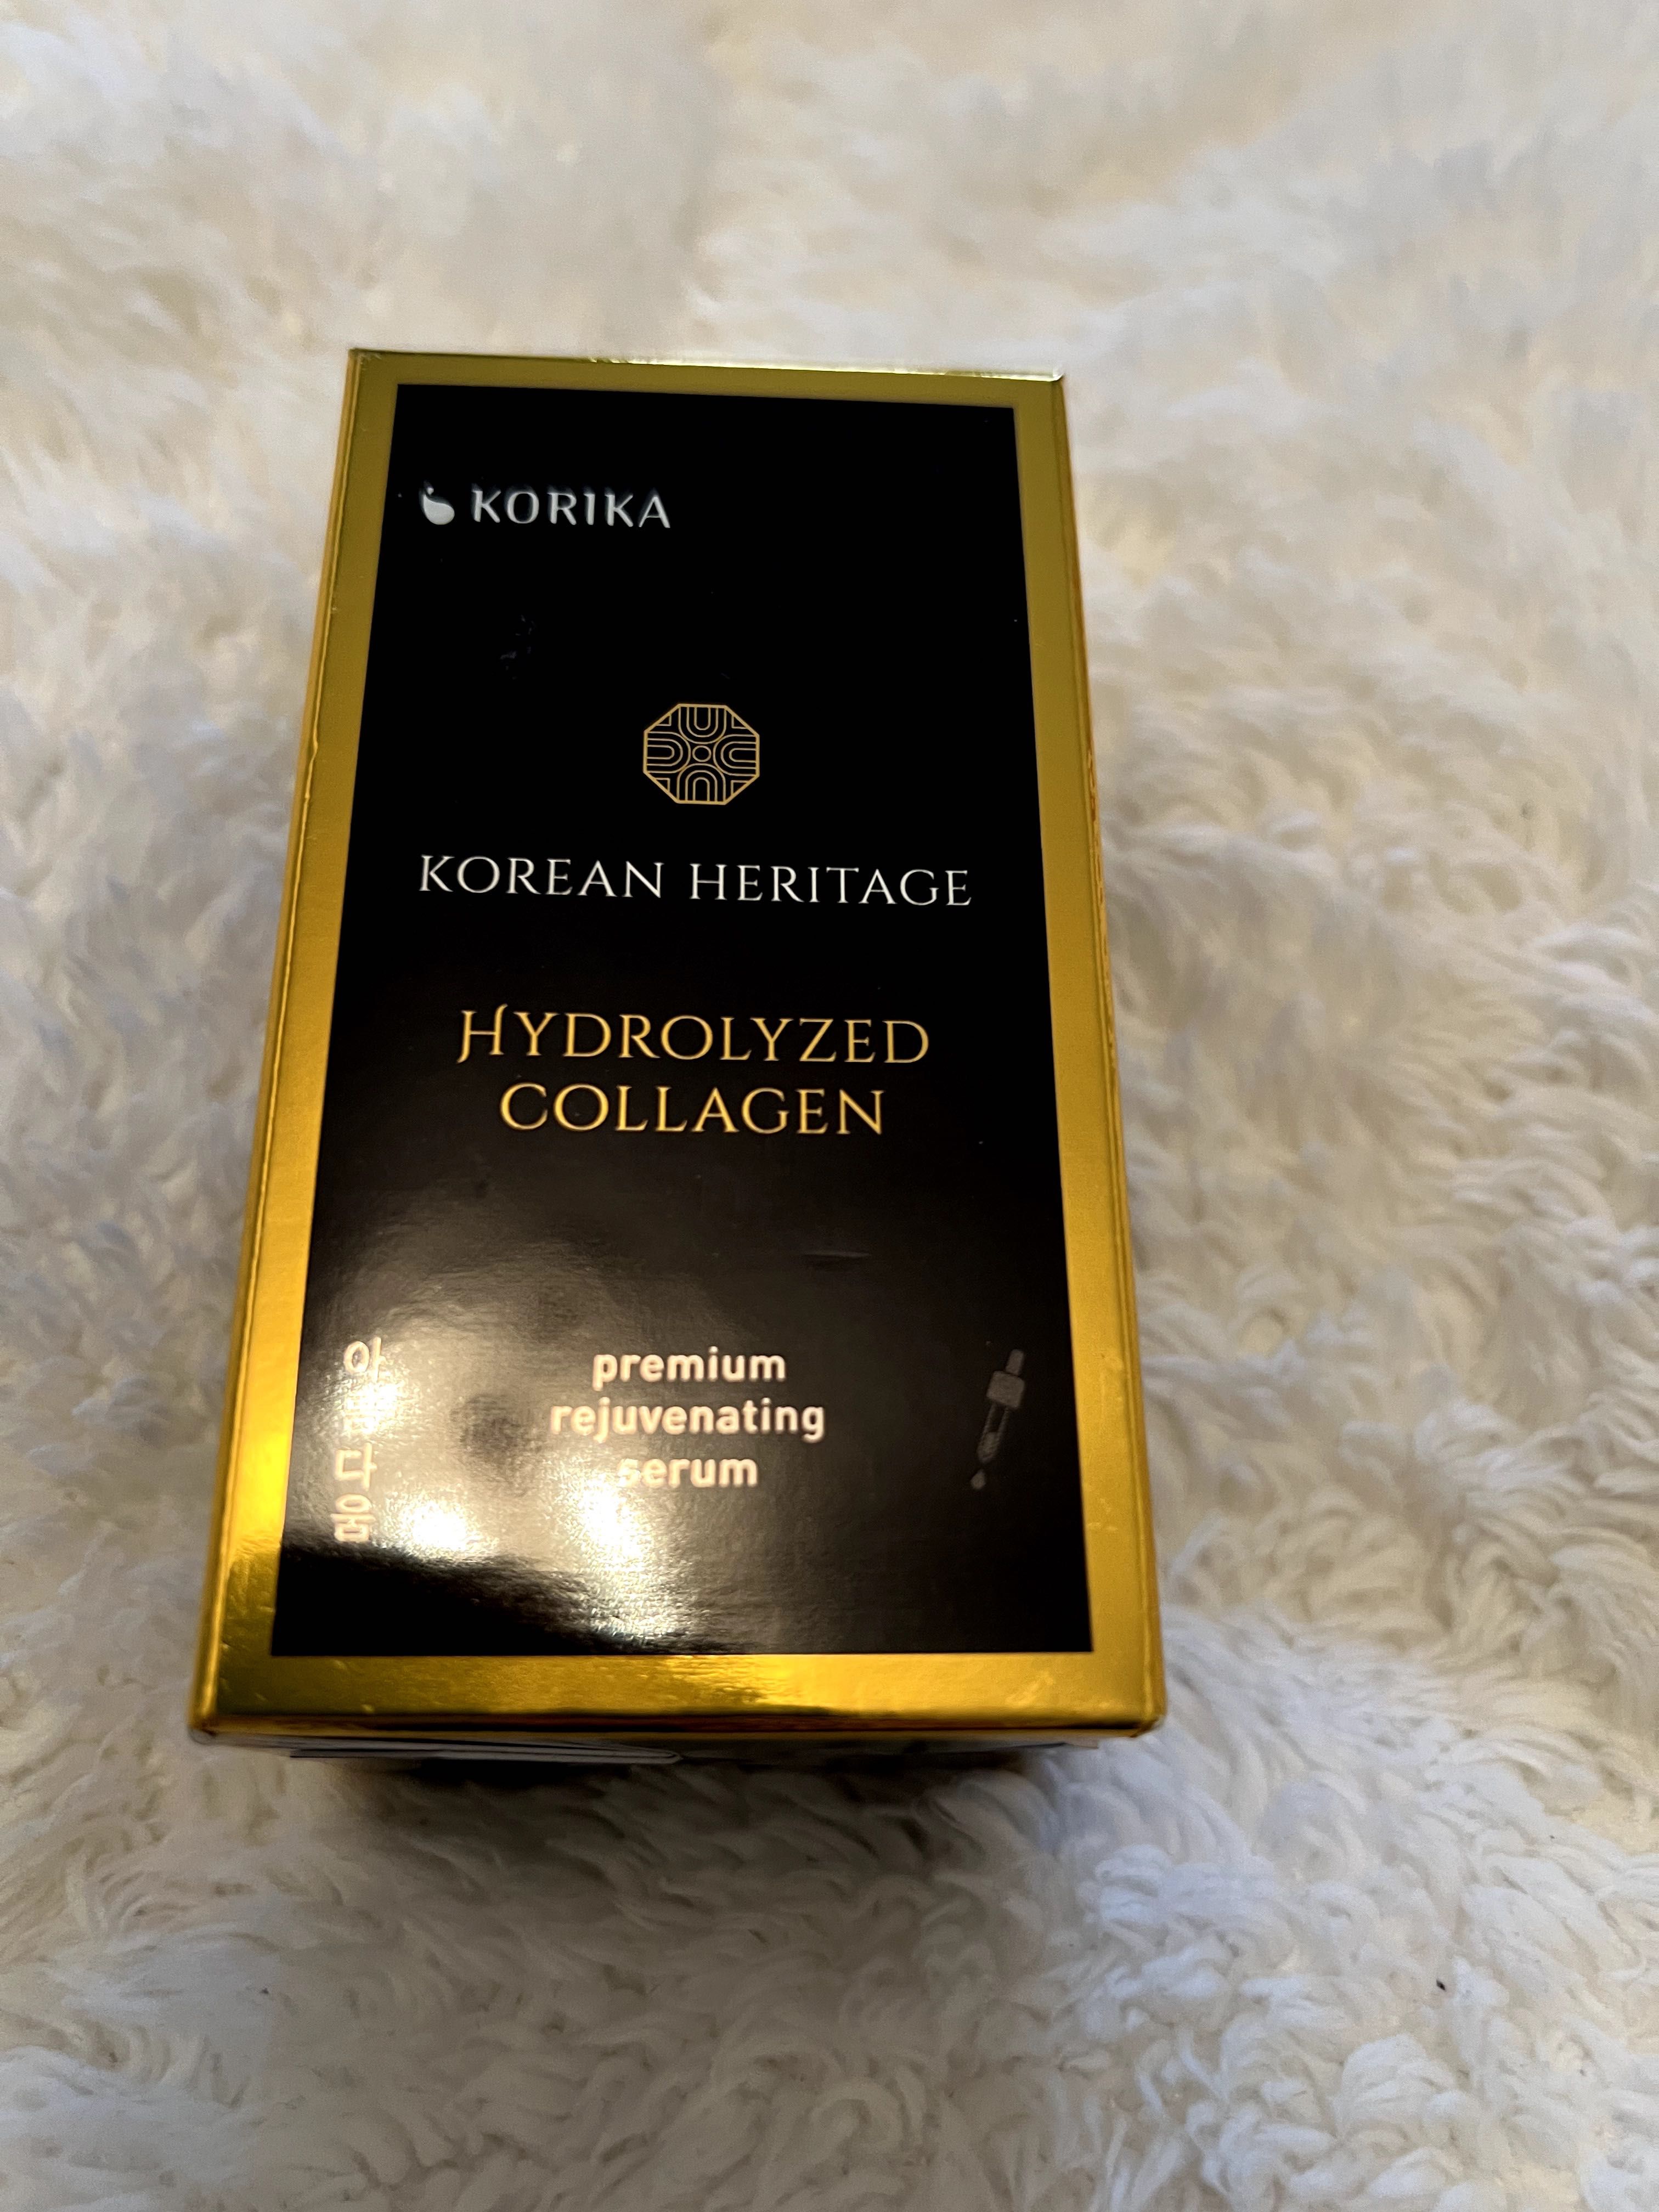 Korika-Korean Heritage Hydrolyzed Collagen Premium Rejuvenating Serum